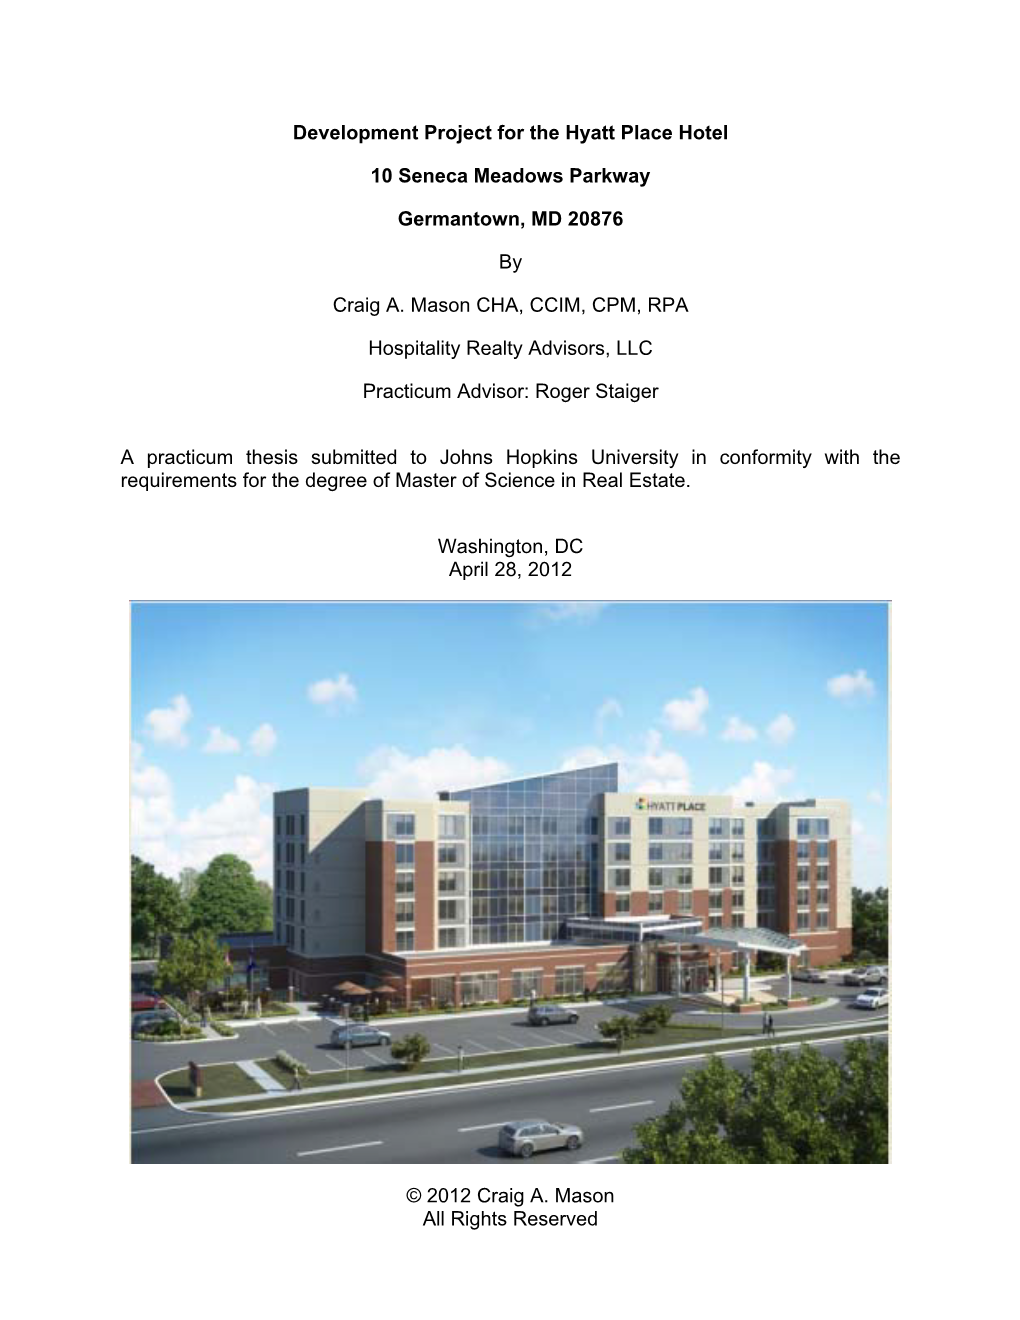 Development Project for the Hyatt Place Hotel 10 Seneca Meadows Parkway Germantown, MD 20876 by Craig A. Mason CHA, CCIM, CPM, R